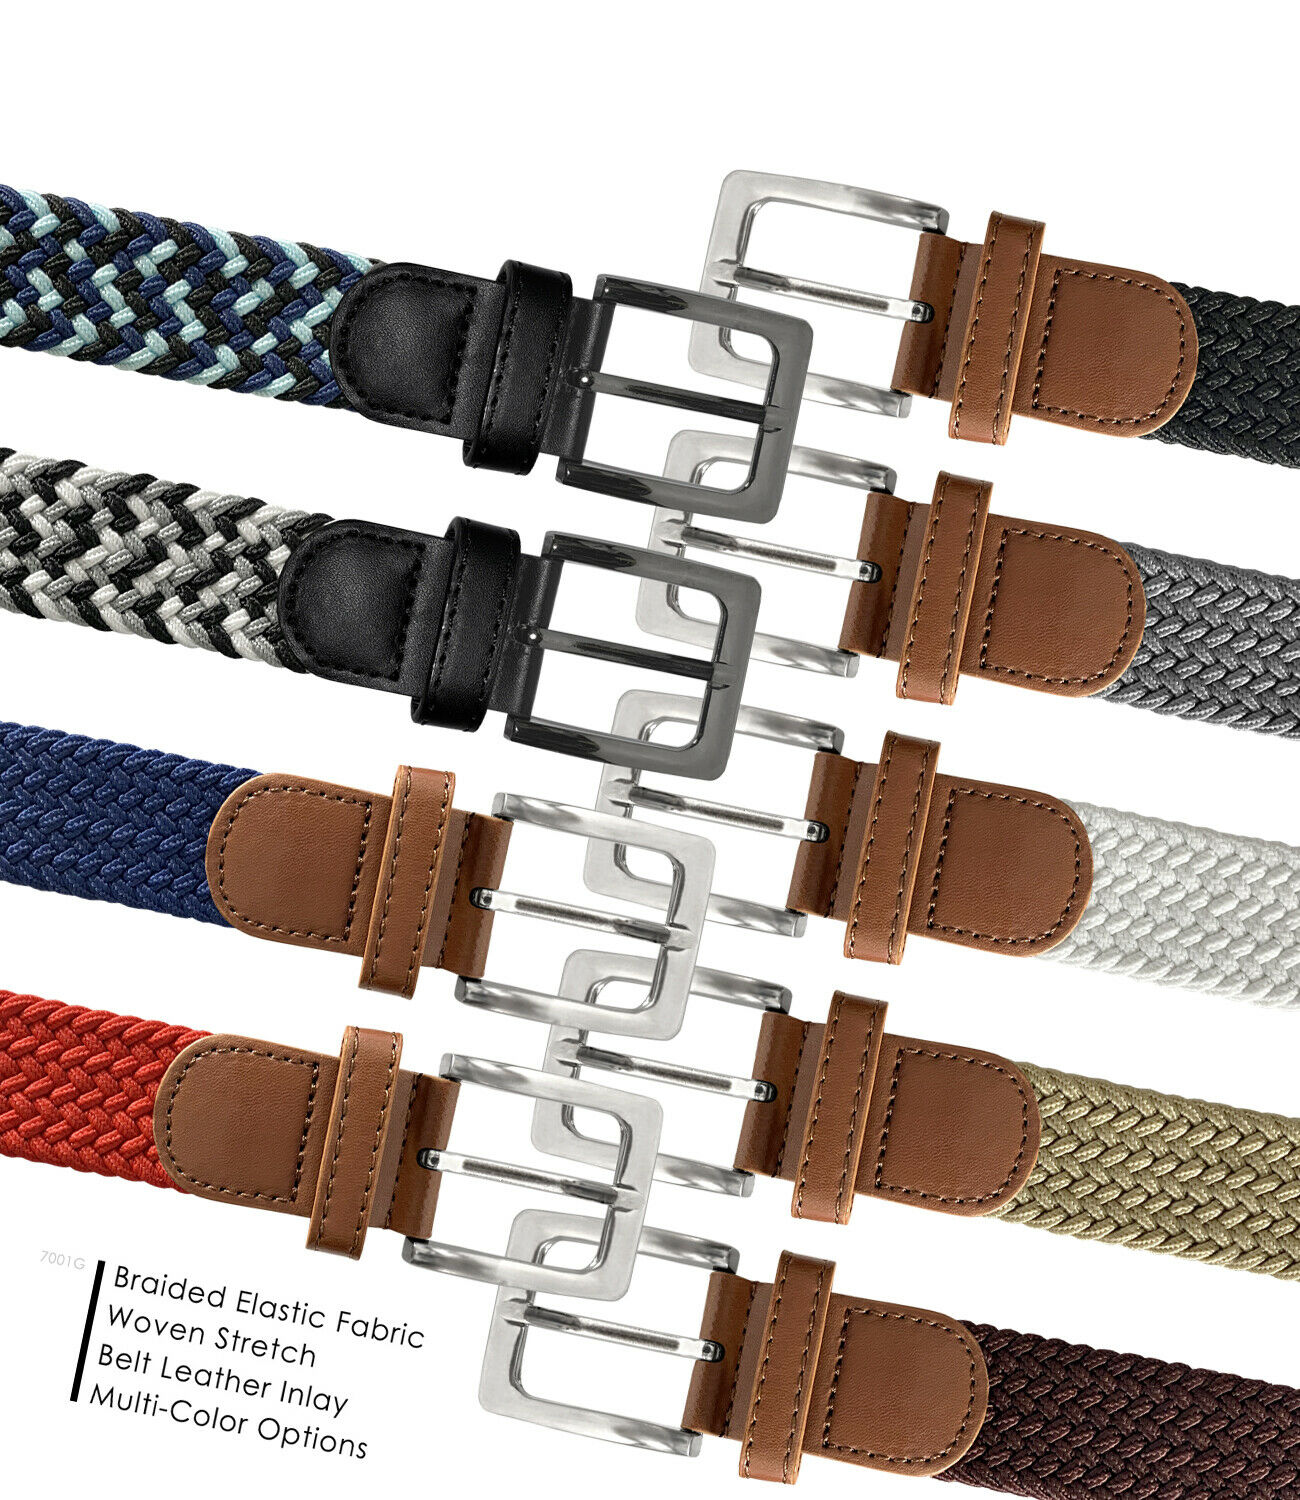 7001g Men's Stretch Belt Braided Elastic Casual Woven Canvas Fabric Belt 1-3/8"